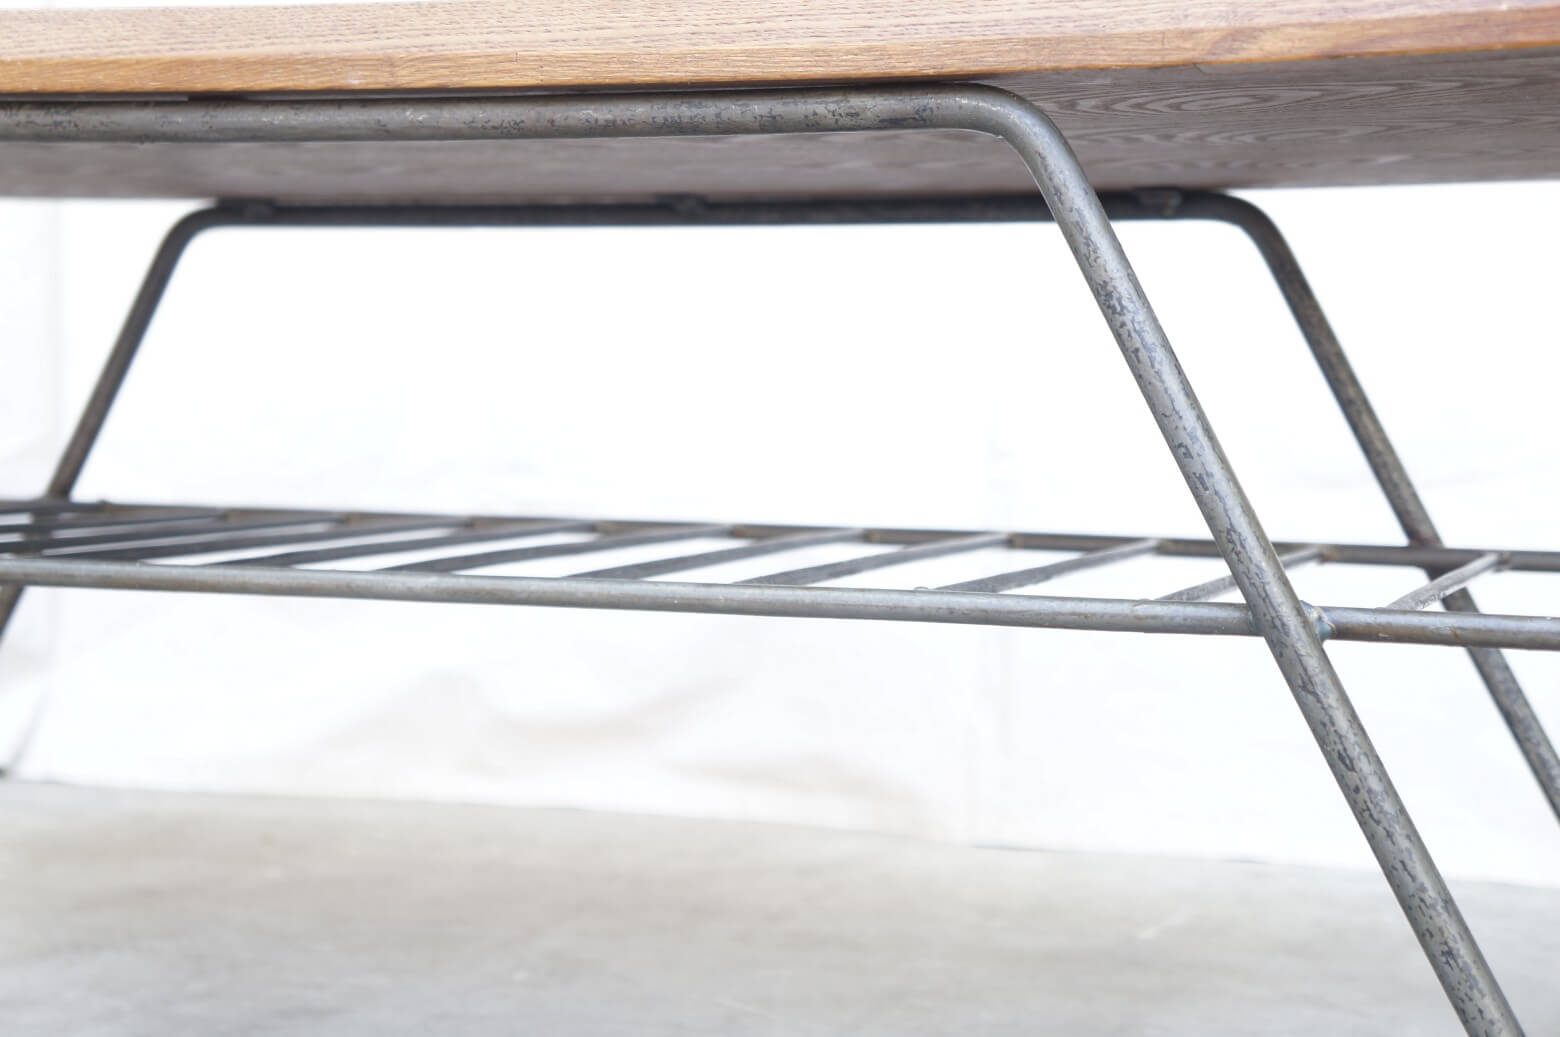 ACME Furniture BELLS FACTORY COFFEE TABLE SMALL 90cm / アクメ ファニチャー ベルズ ファクトリー コーヒーテーブル